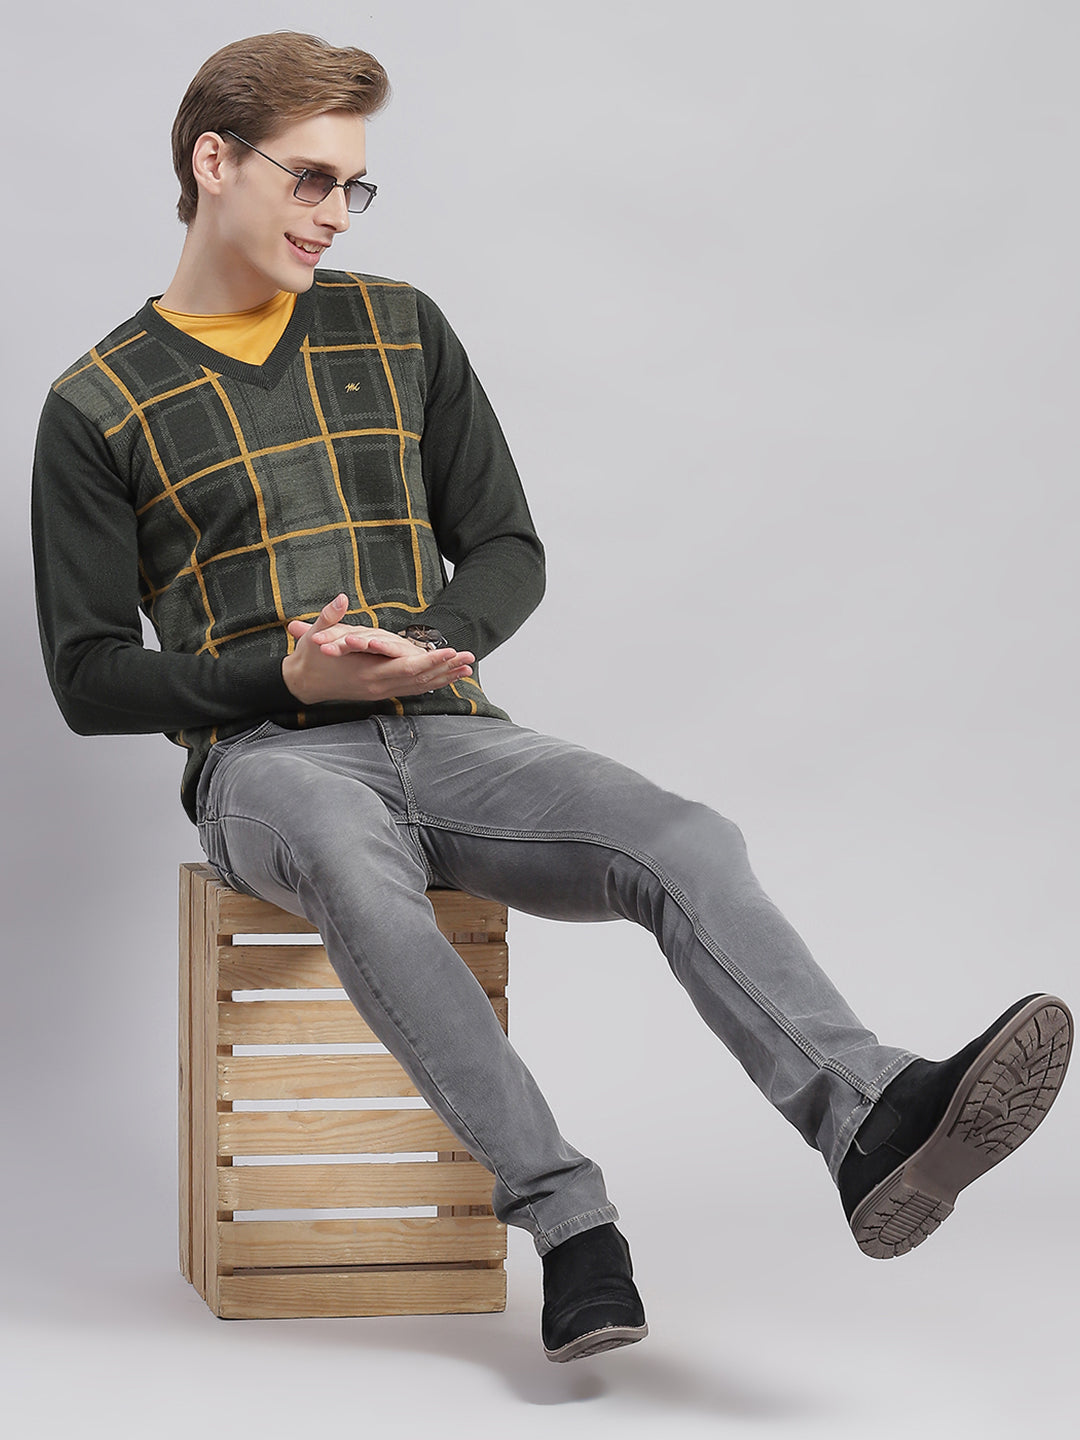 Men Grey Self Design V Neck Full Sleeve Sweaters/Pullovers